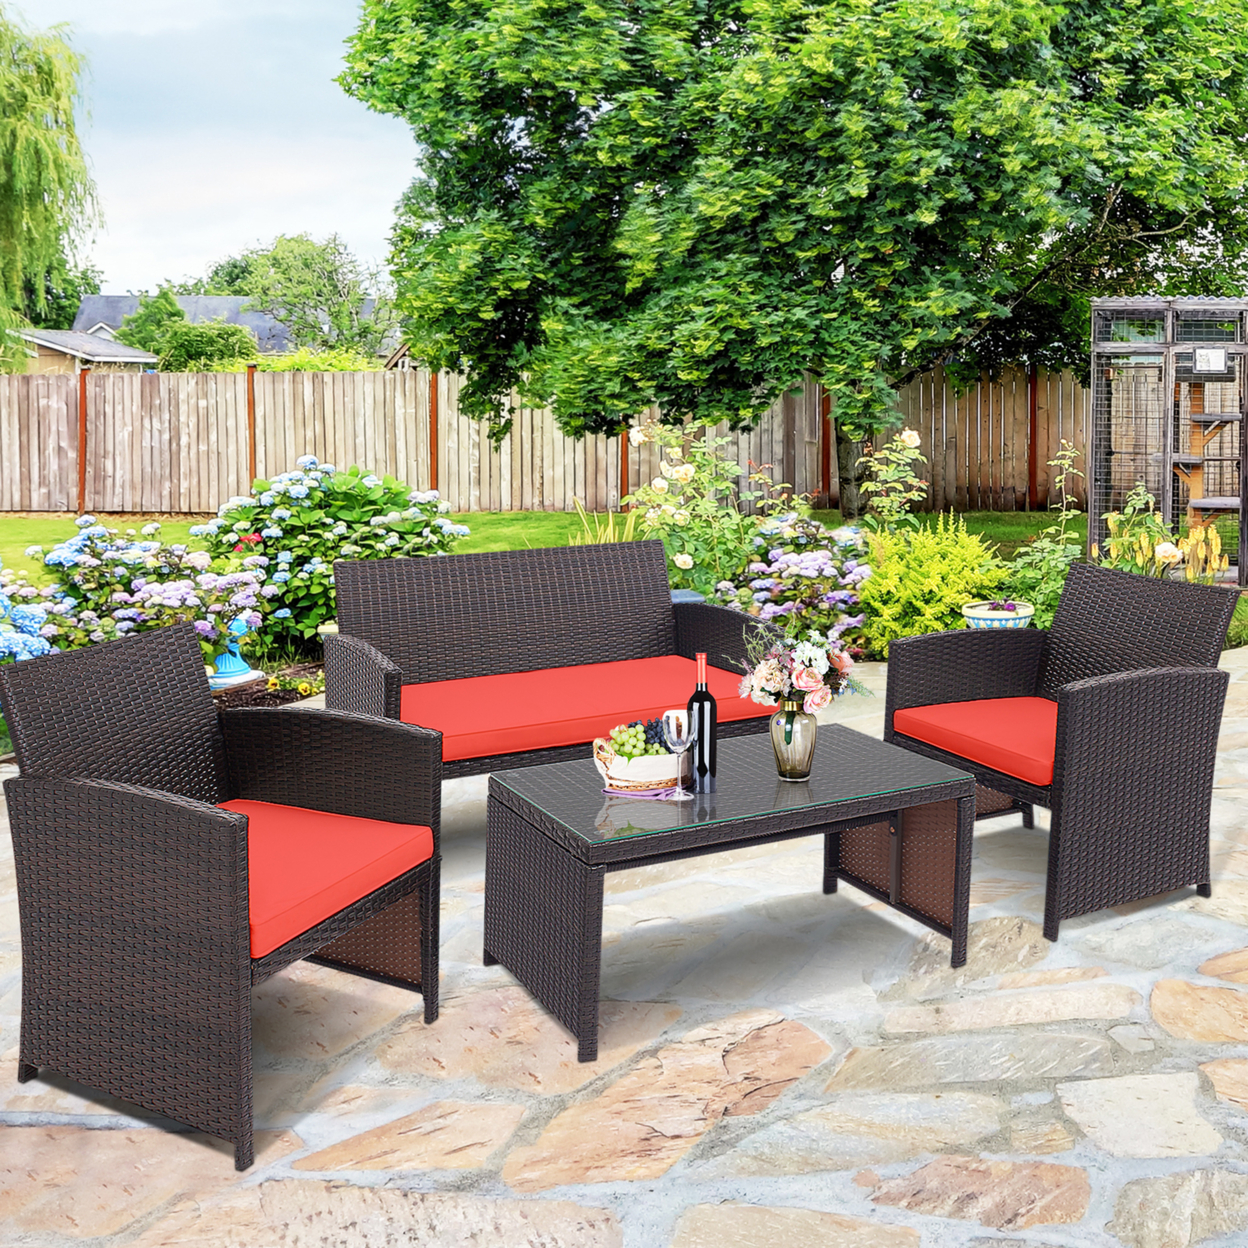 4PCS Patio Conversation Set Outdoor Rattan Furniture Set W/ Red Cushions